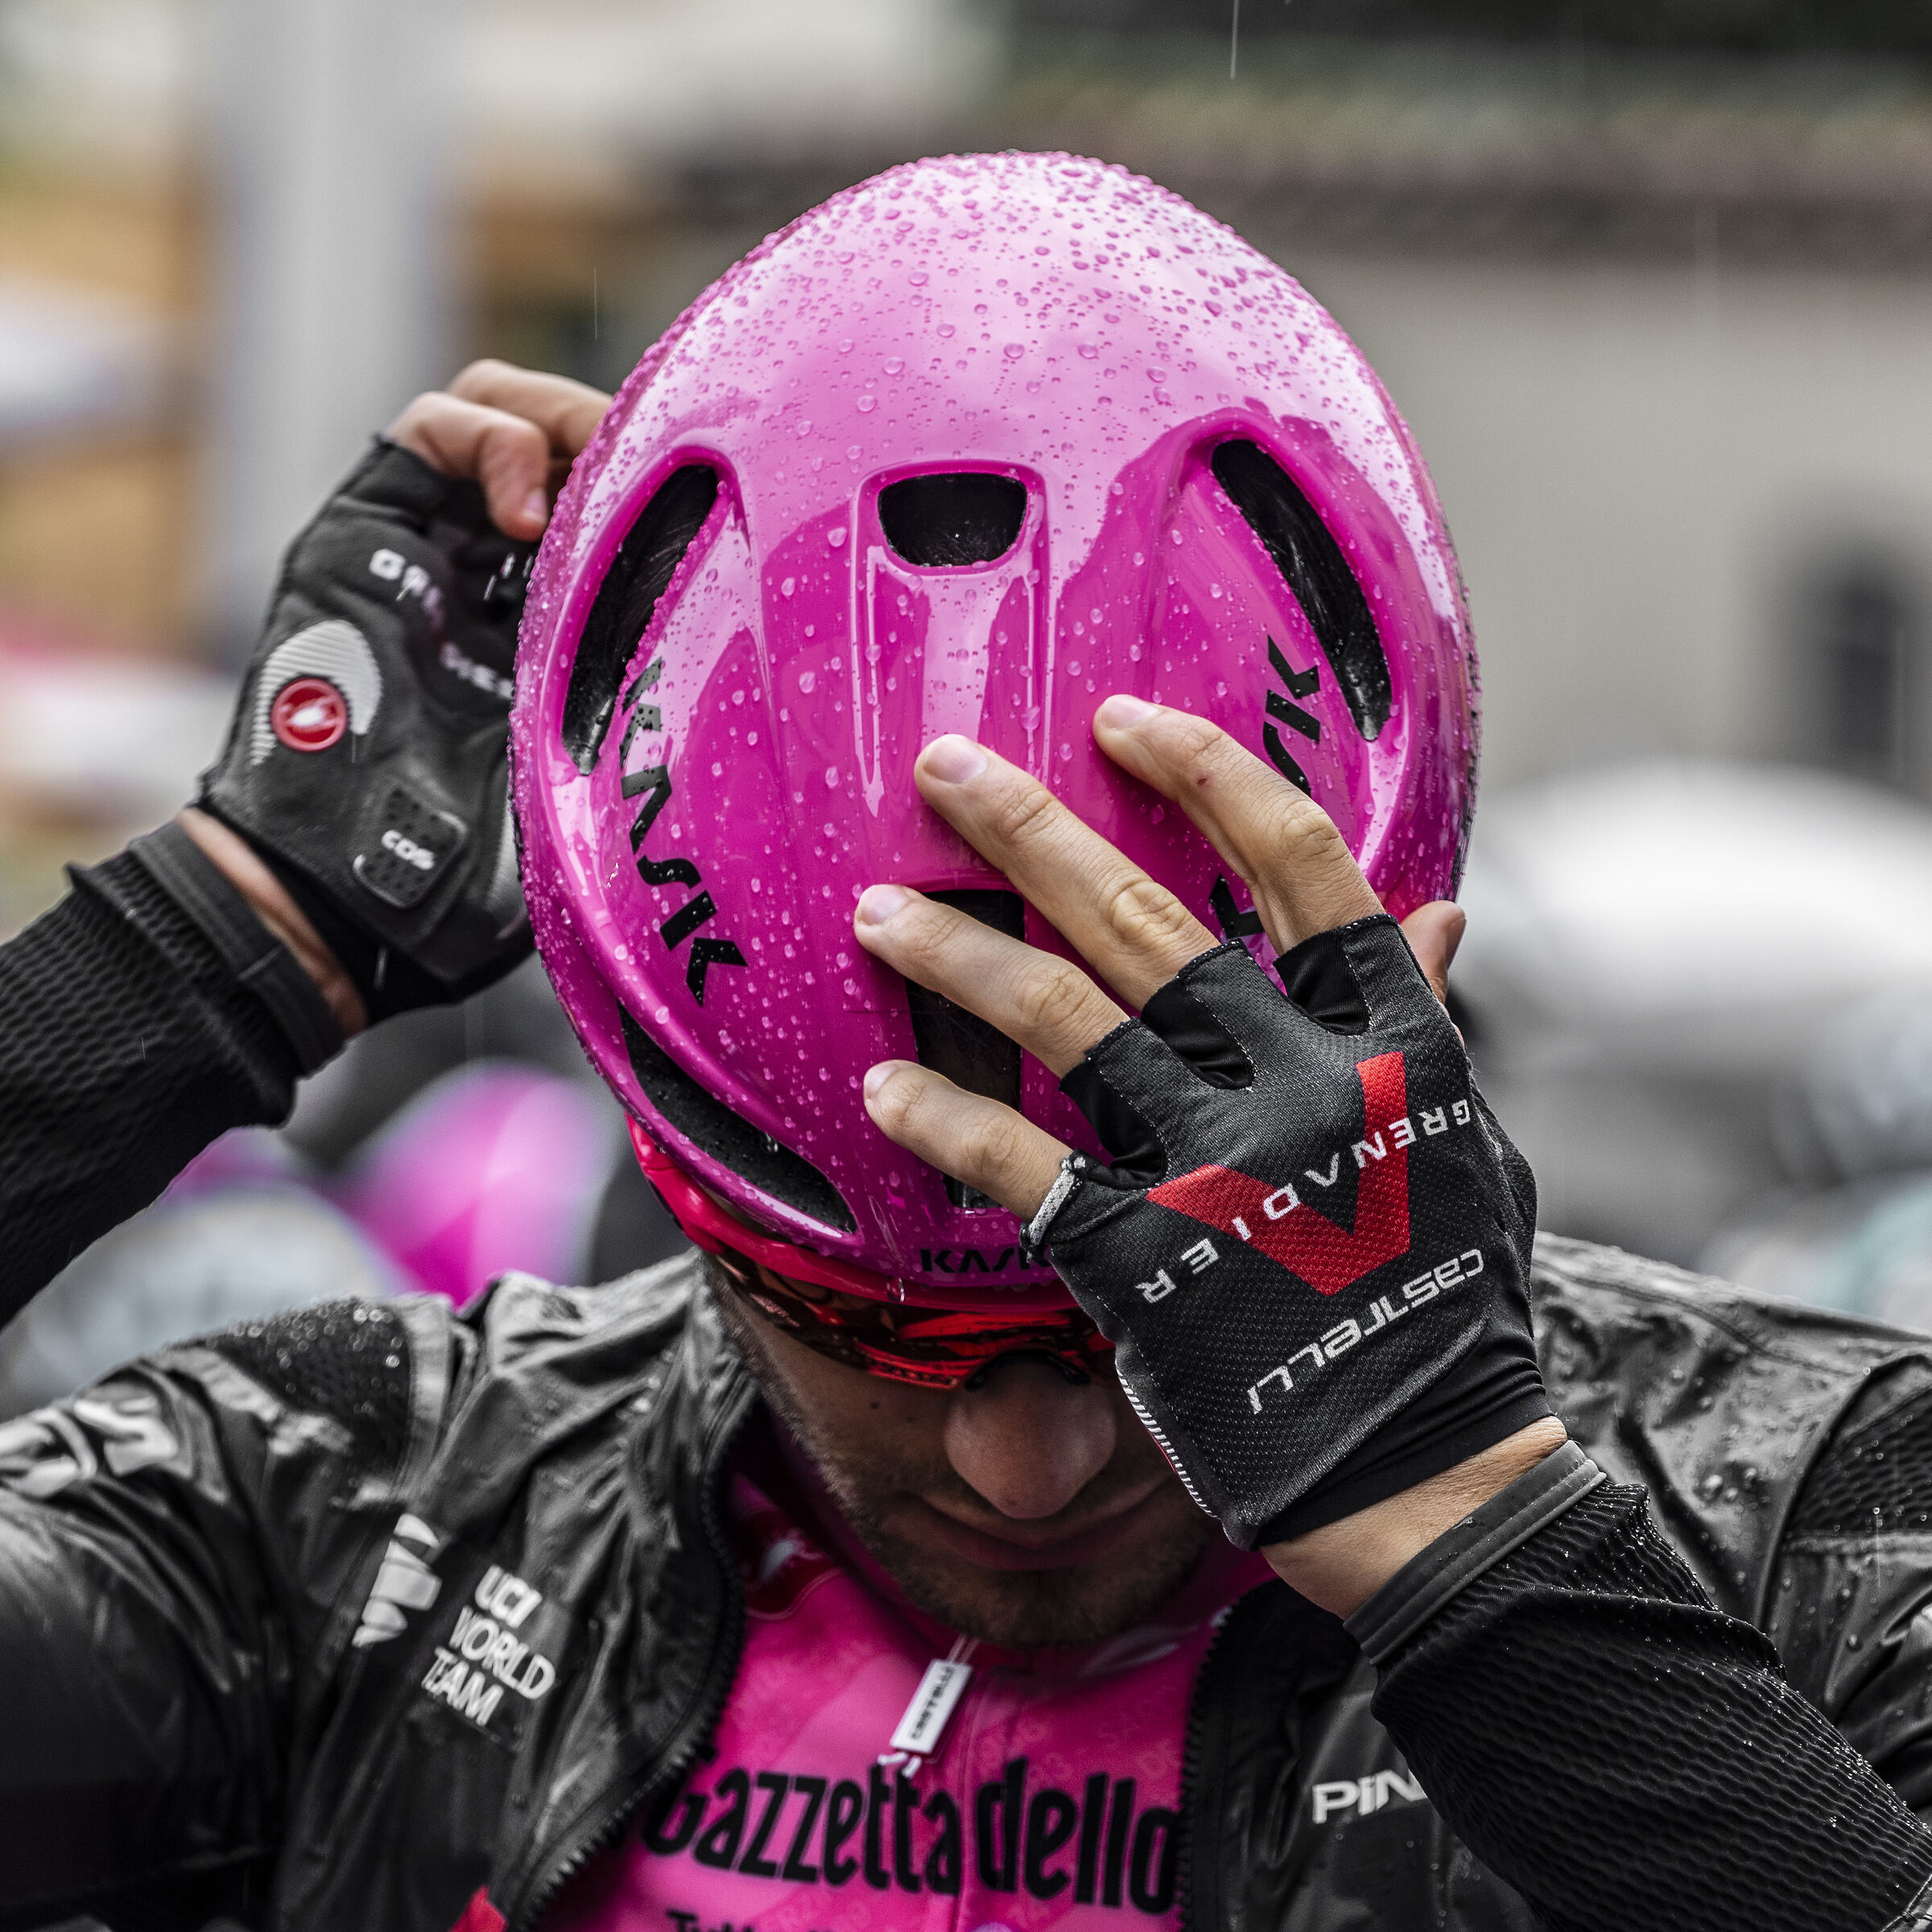 Giro d'italia 2021 Filippo Ganna in pink...